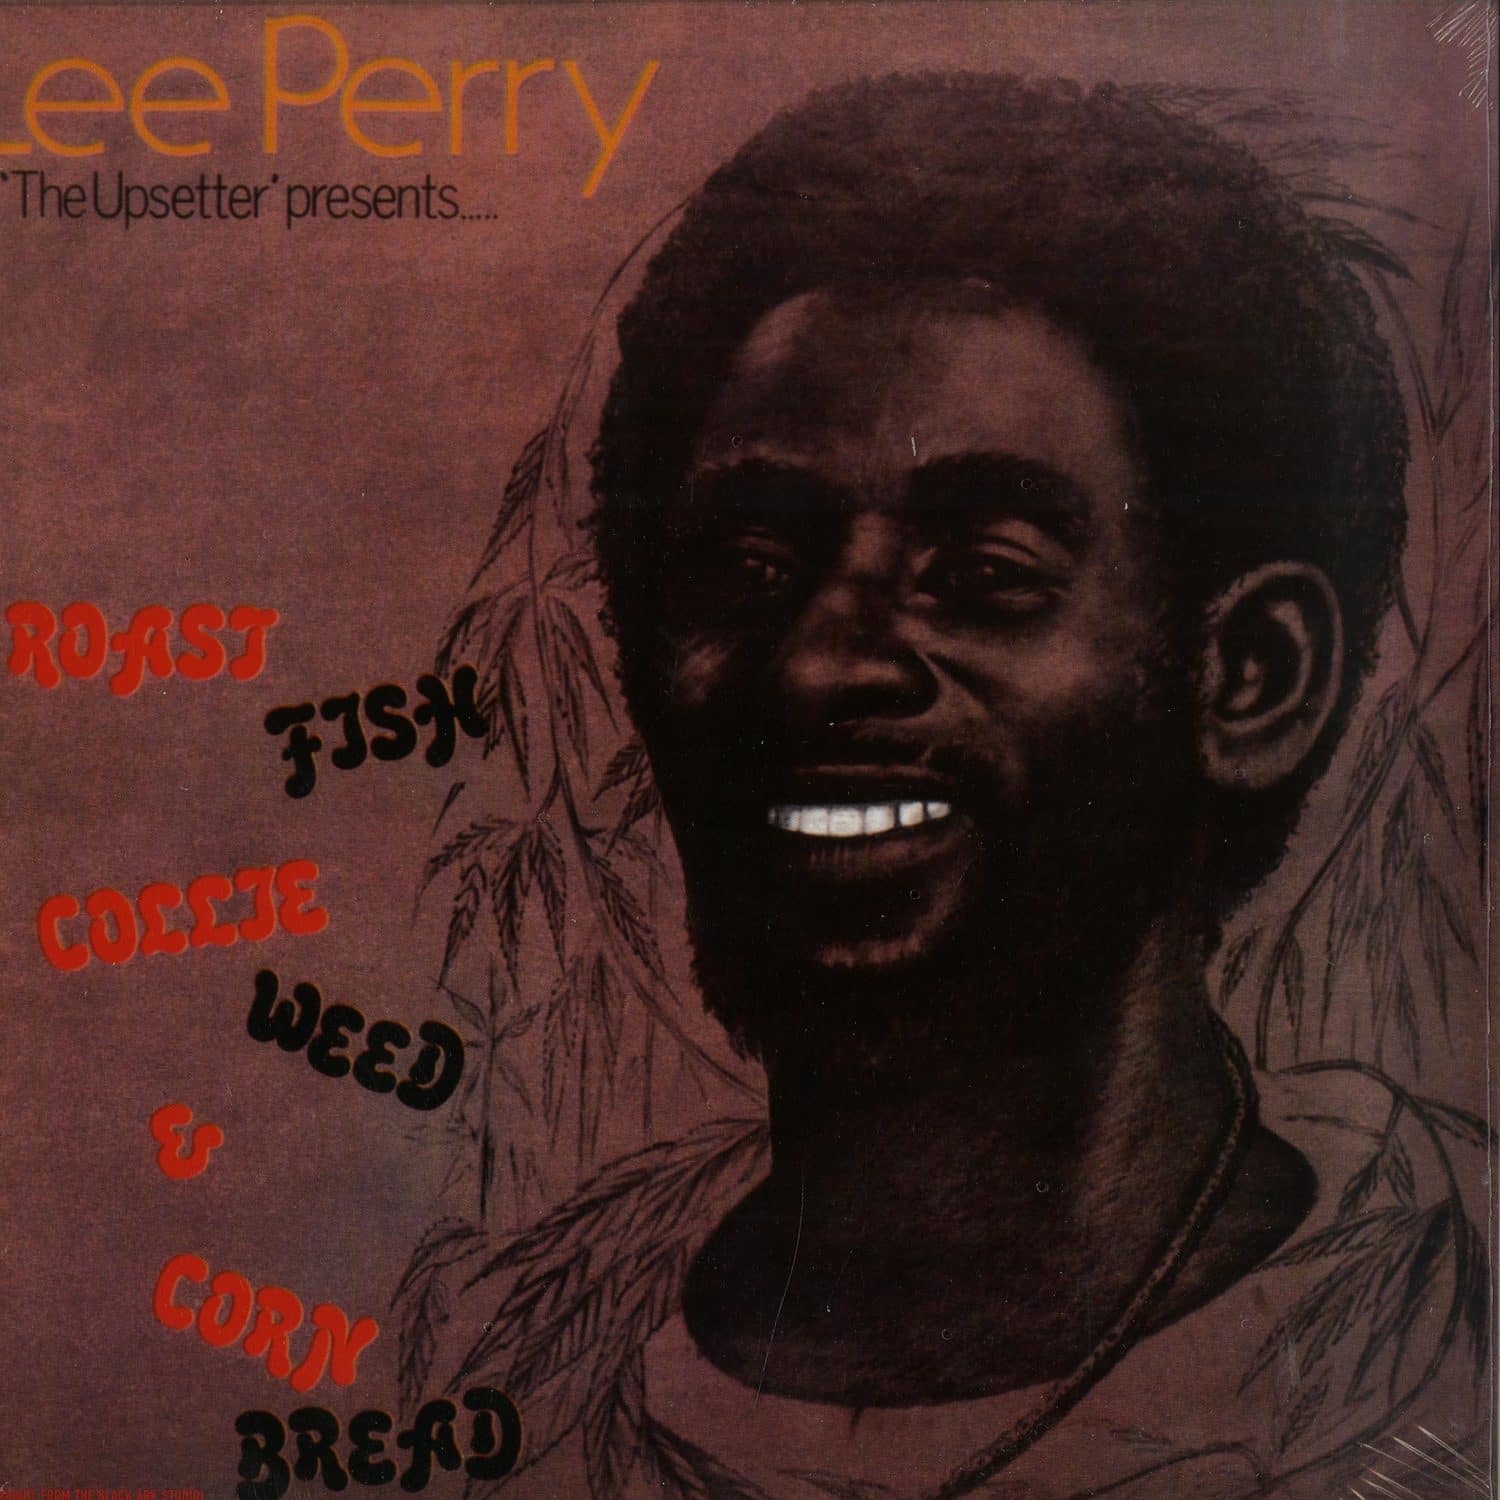 Lee Perry - ROAST FISH COLLIE WEED & CORN BREAD 